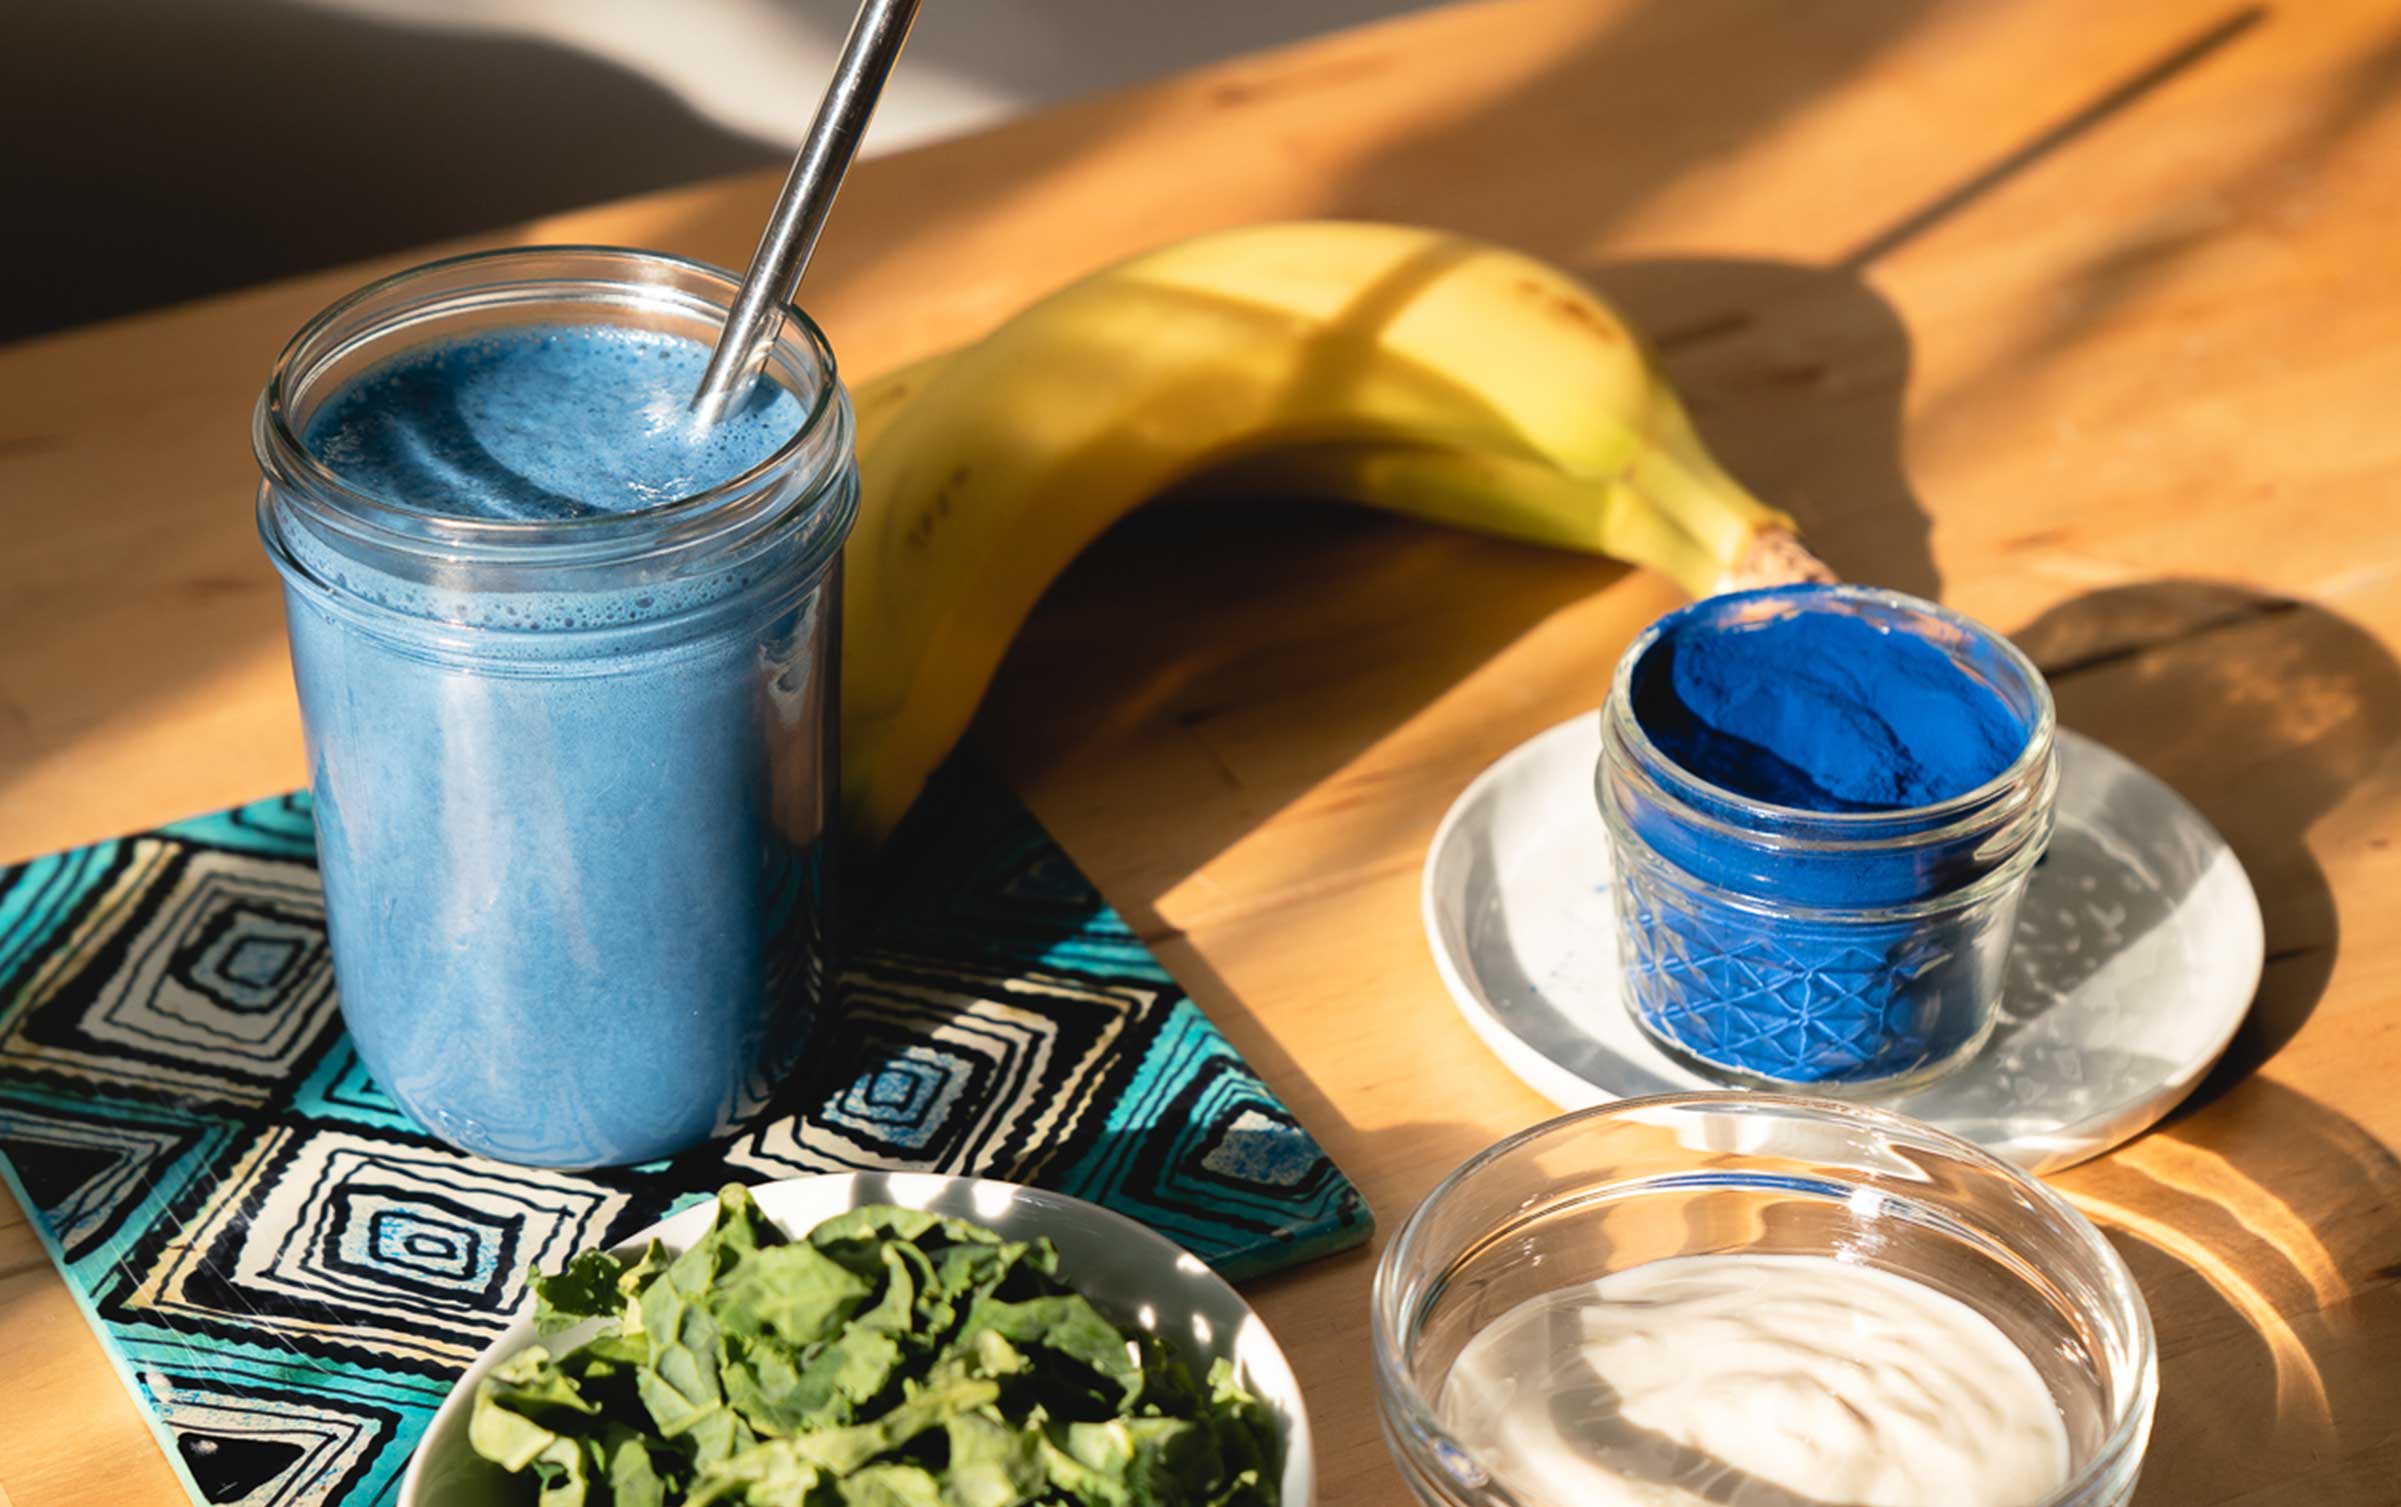 Kale and banana smoothie - Maya Feller Nutrition